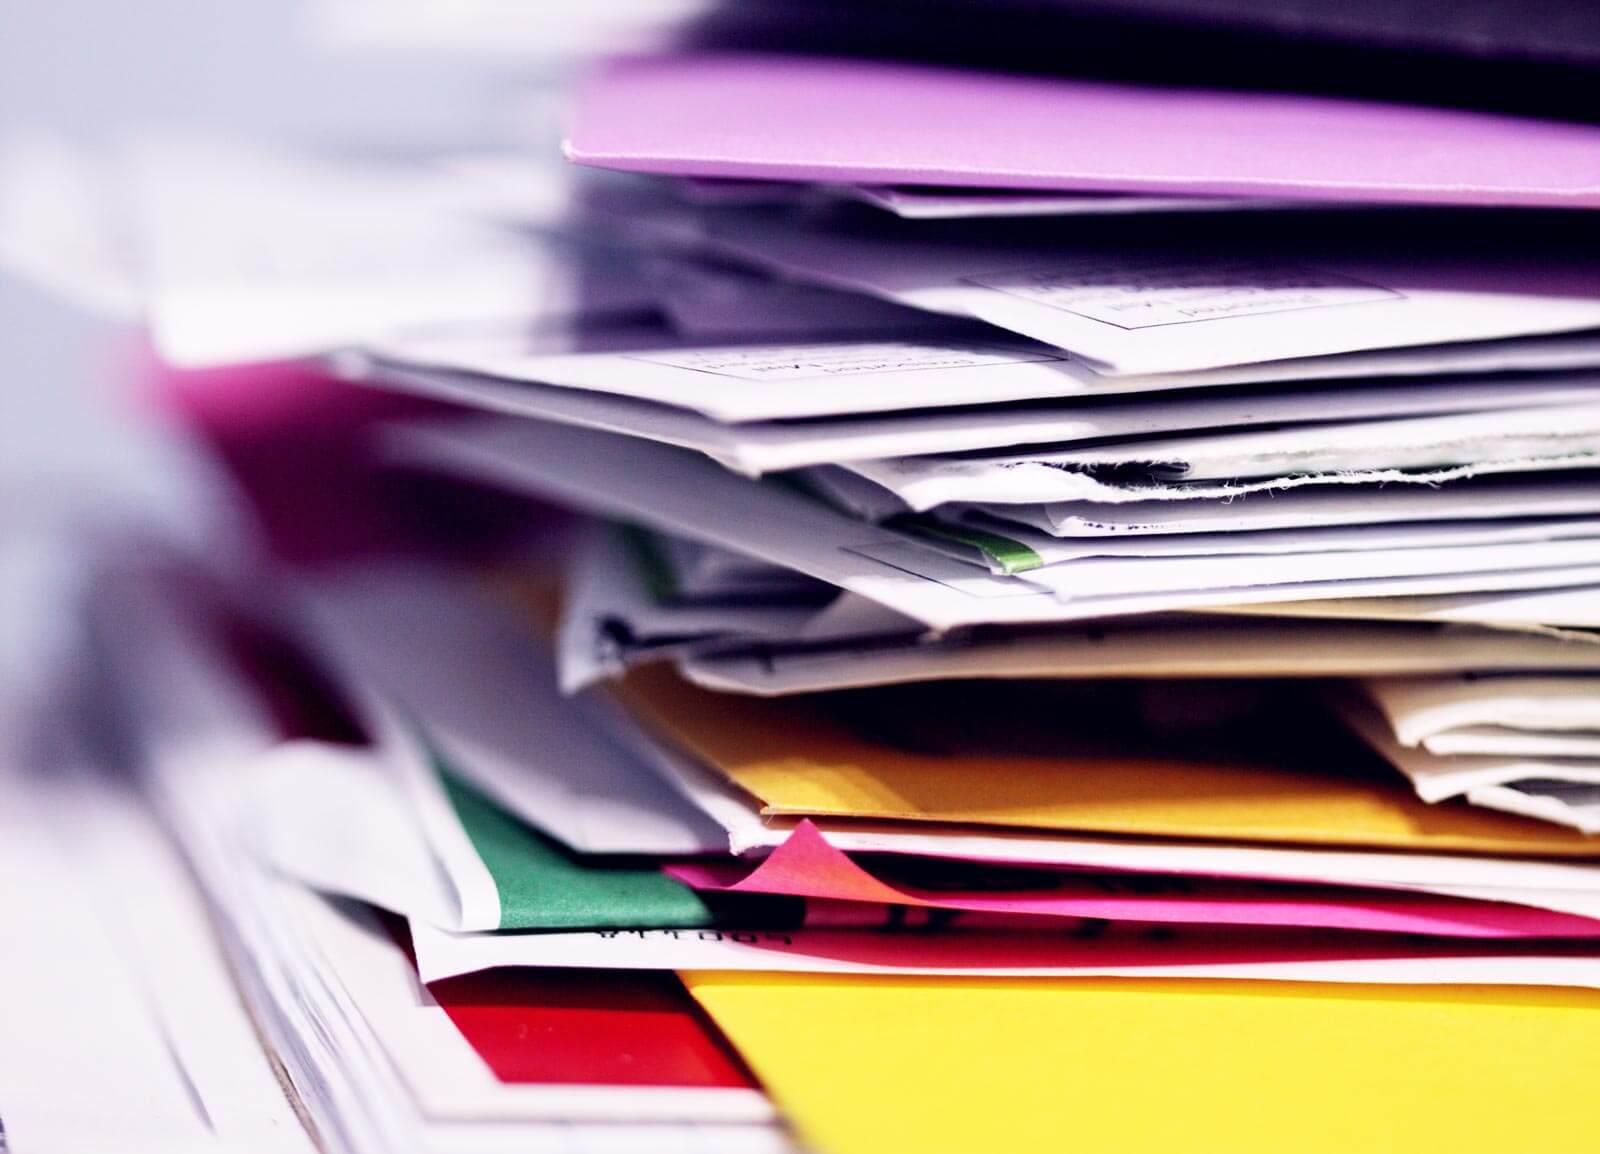 piles of disorganized paper